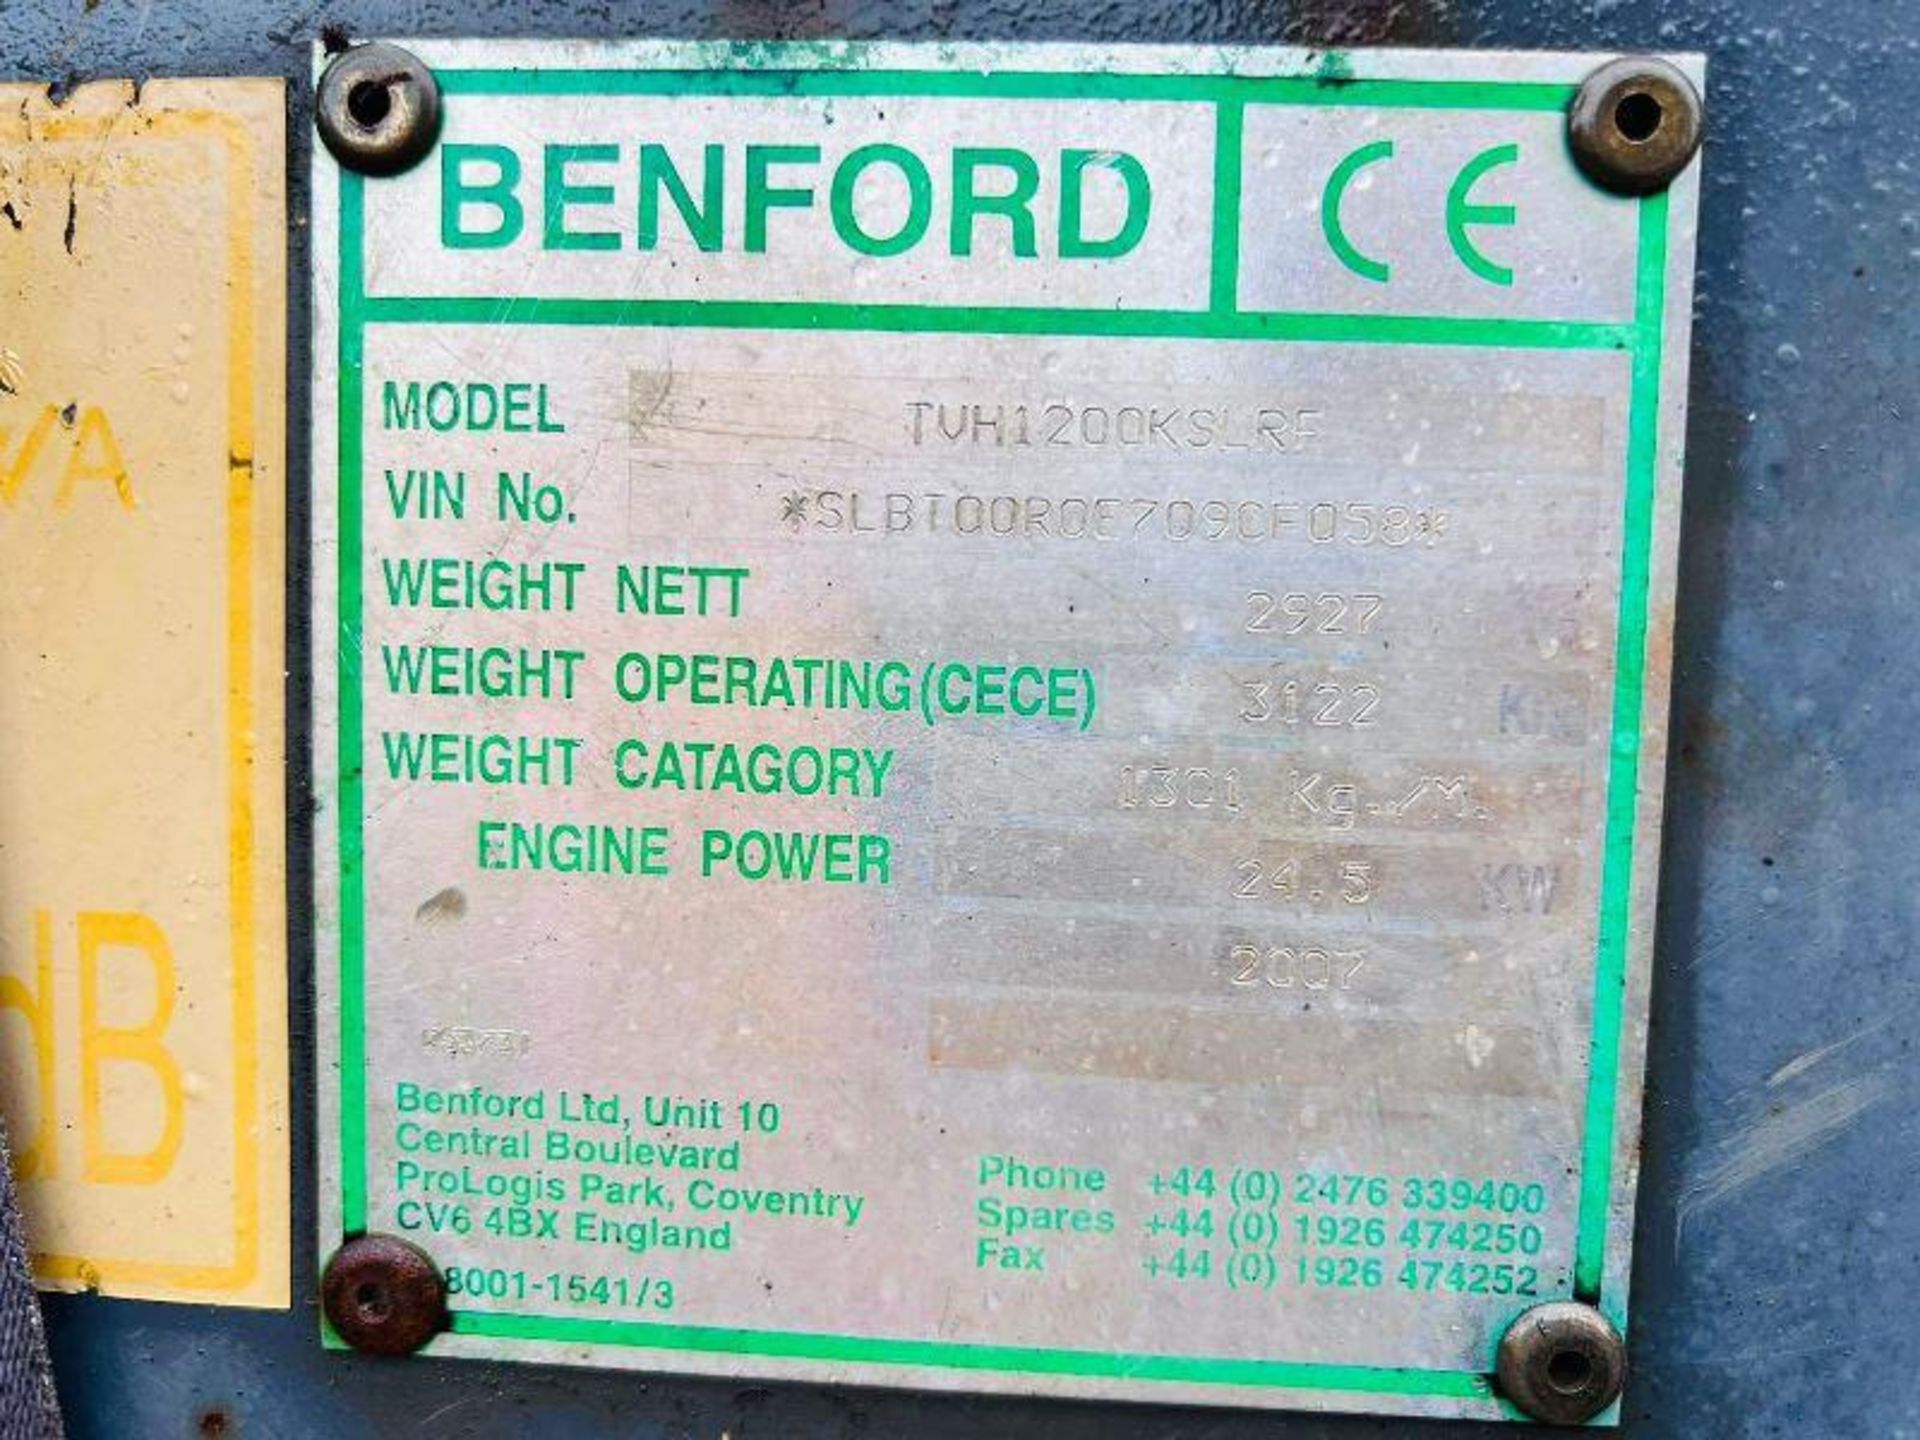 BENFORD TVH1200KSL DOUBLE DRUM ROLLER C/W KUBOTA ENGINE - Image 3 of 10